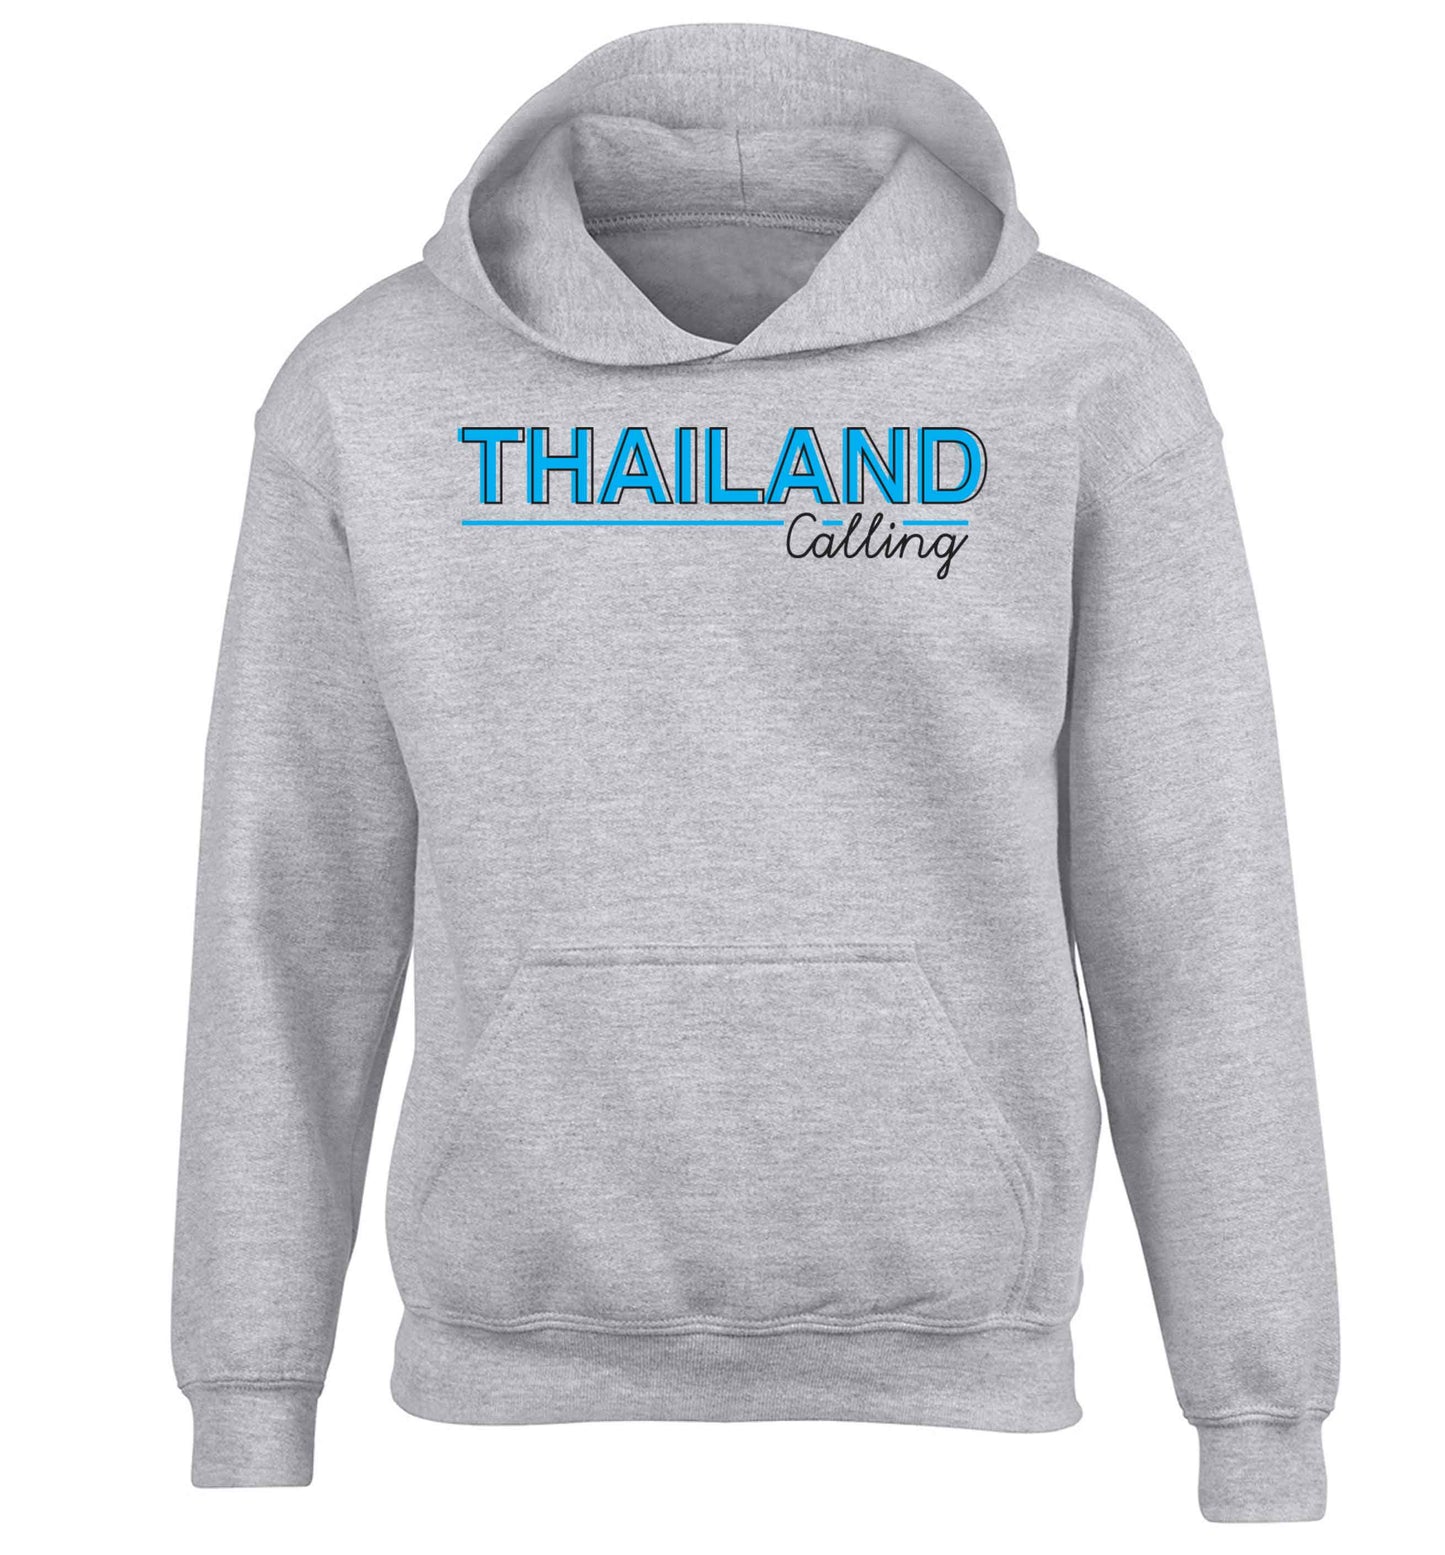 Thailand calling children's grey hoodie 12-13 Years